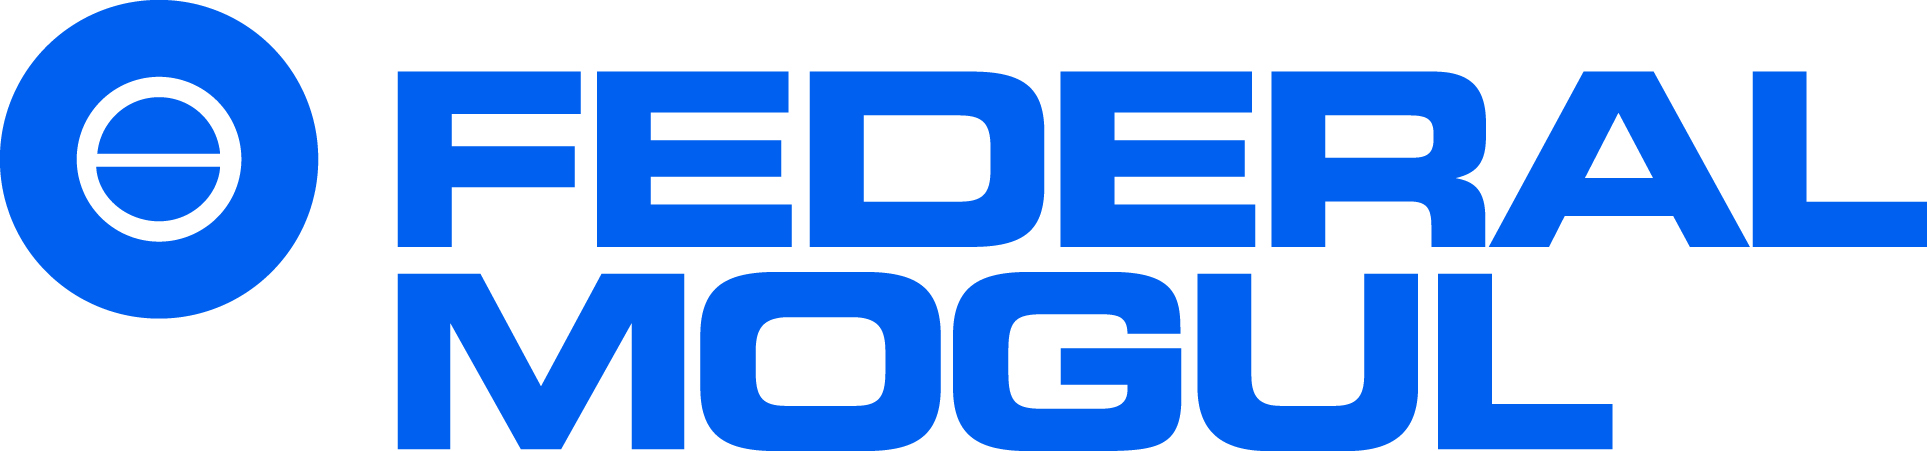 MILEV AUTOMOBILE - logo Federal Mogul